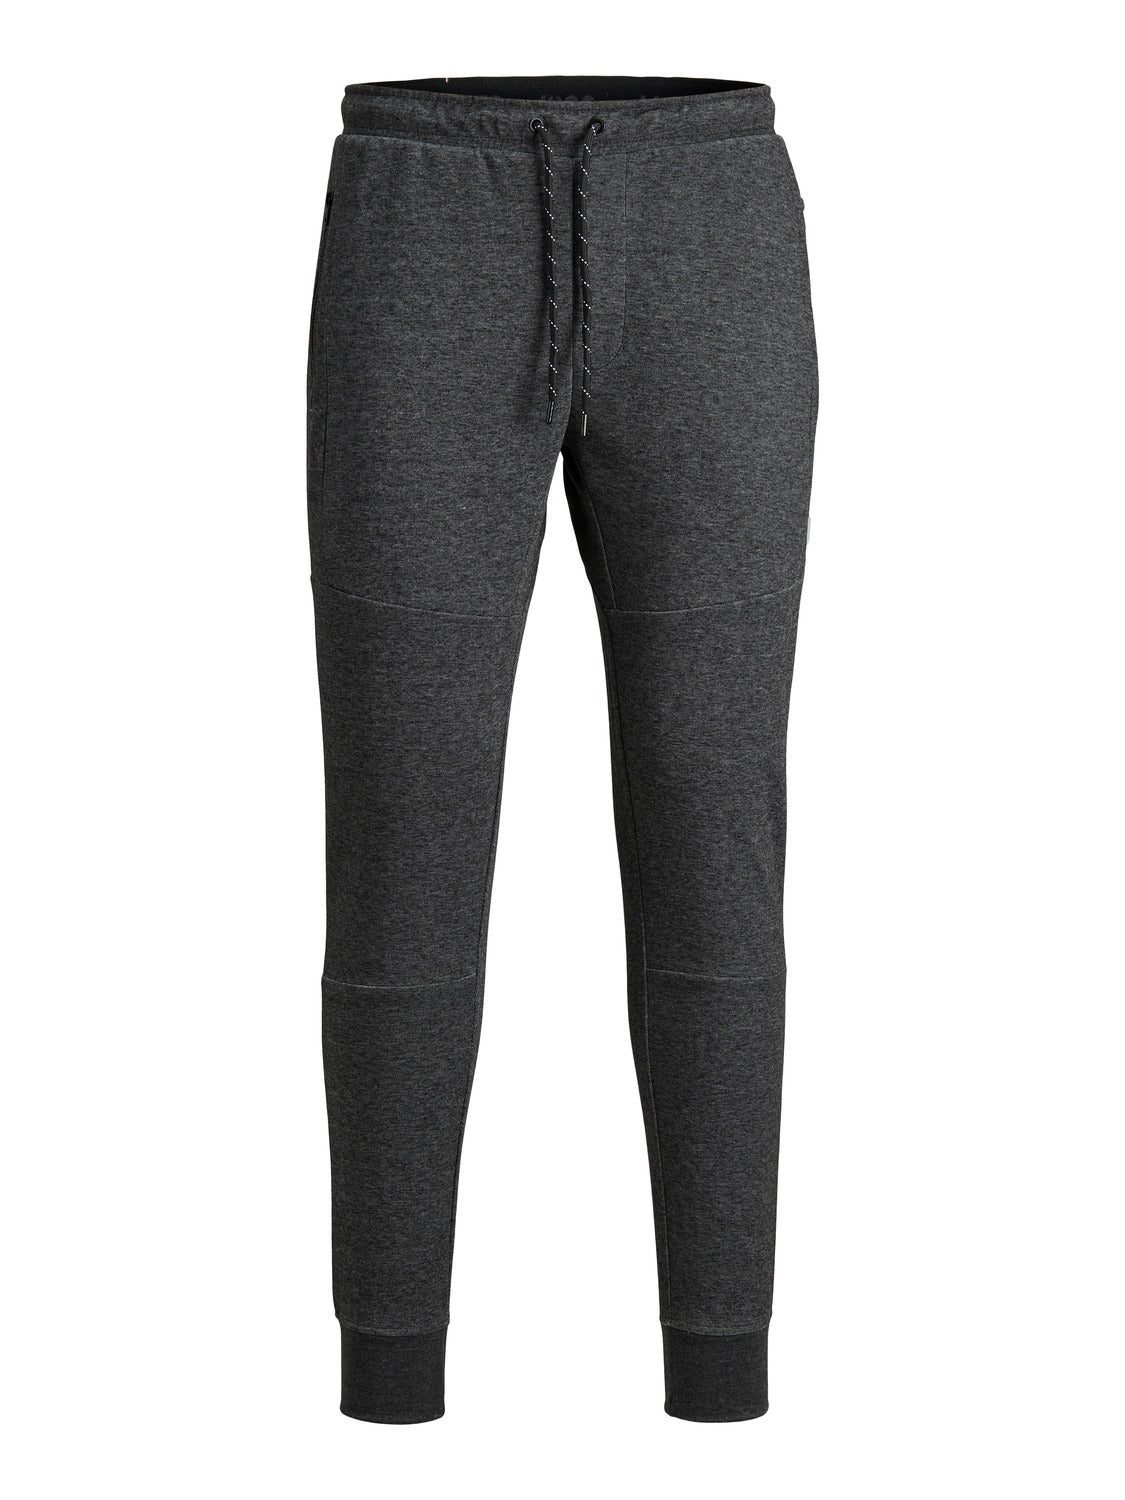 Jack & Jones 2 pack sweatpants with logo in gray & black | ASOS